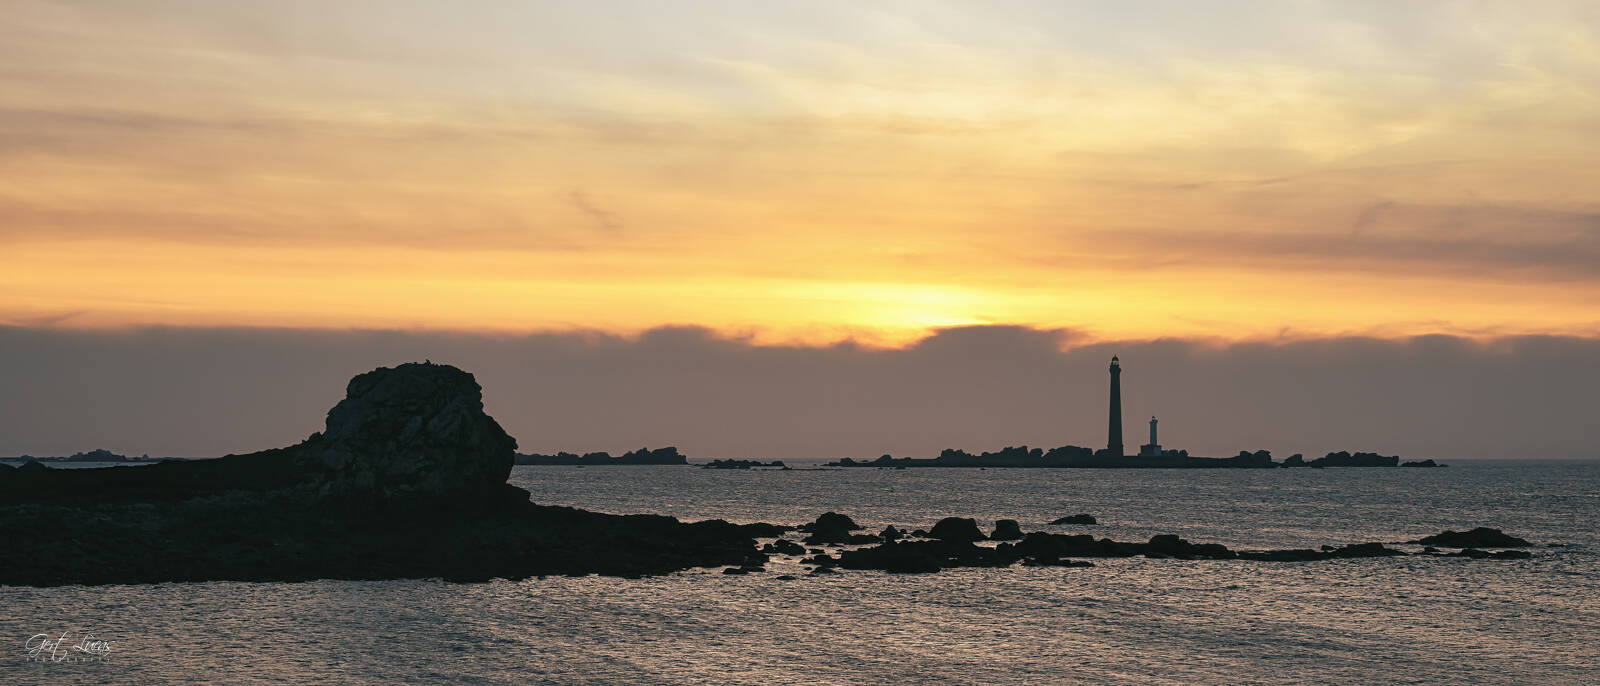 Image of Virgin Island lighthouse - sunset viewpoint by Gert Lucas